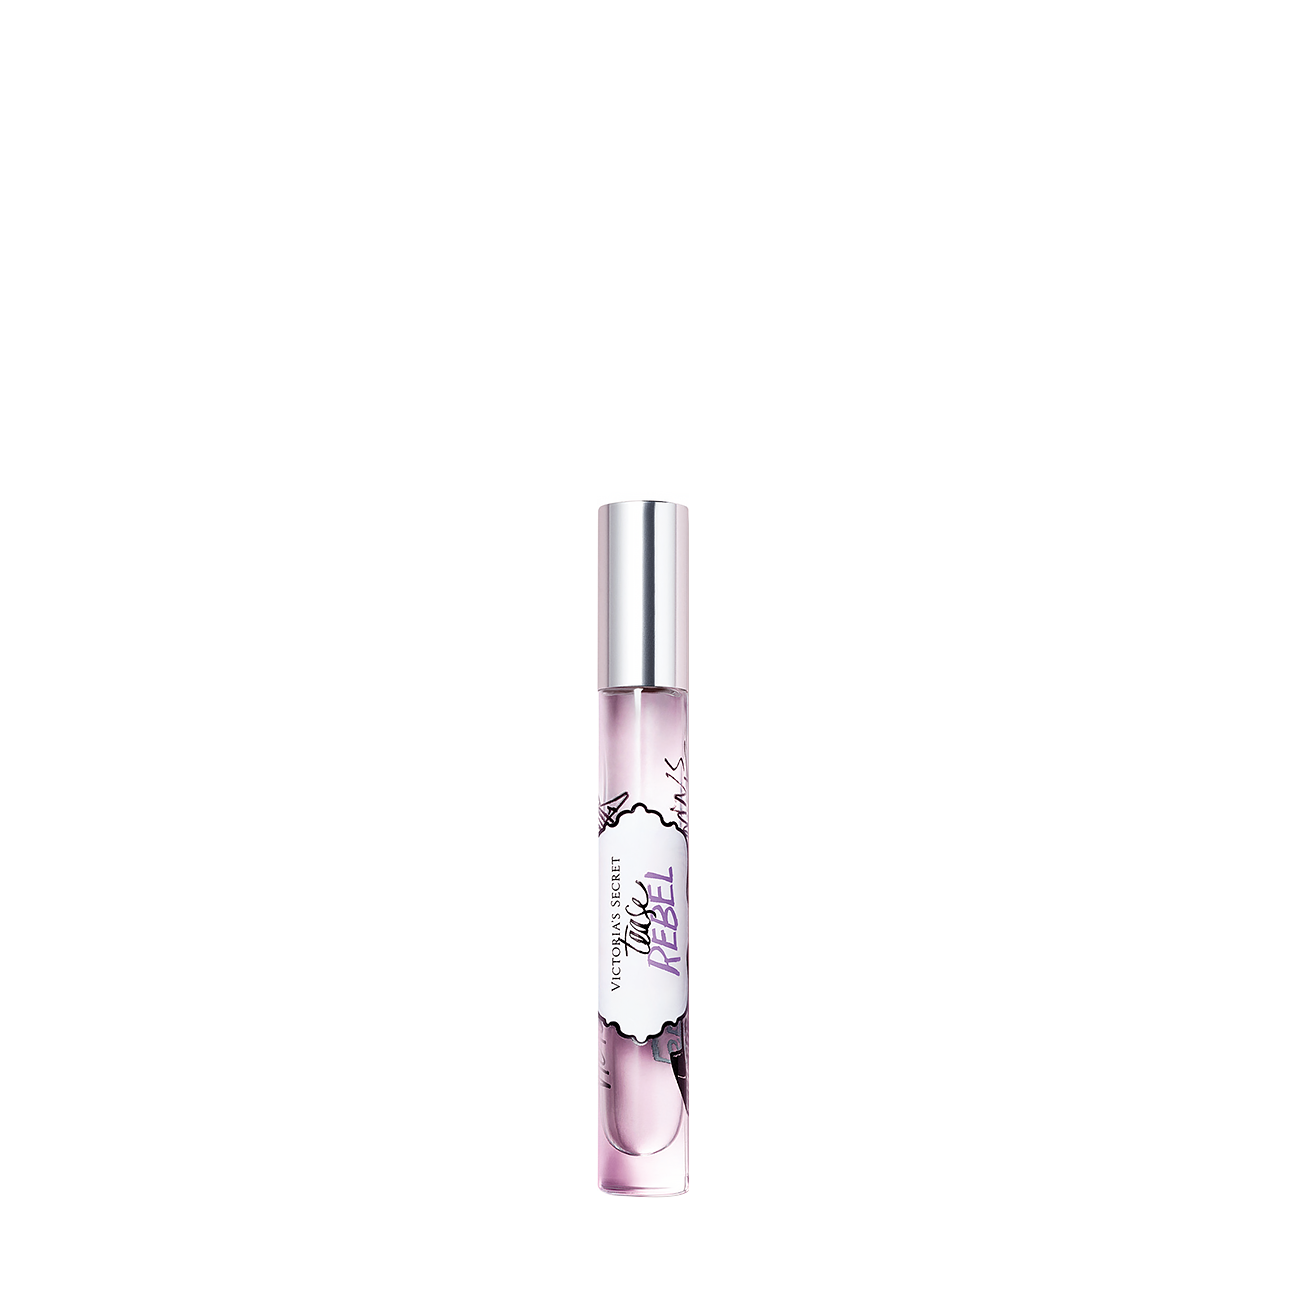 Apa de Parfum Victoria’s Secret TEASE REBEL ROLLERBALL 7ml cu comanda online